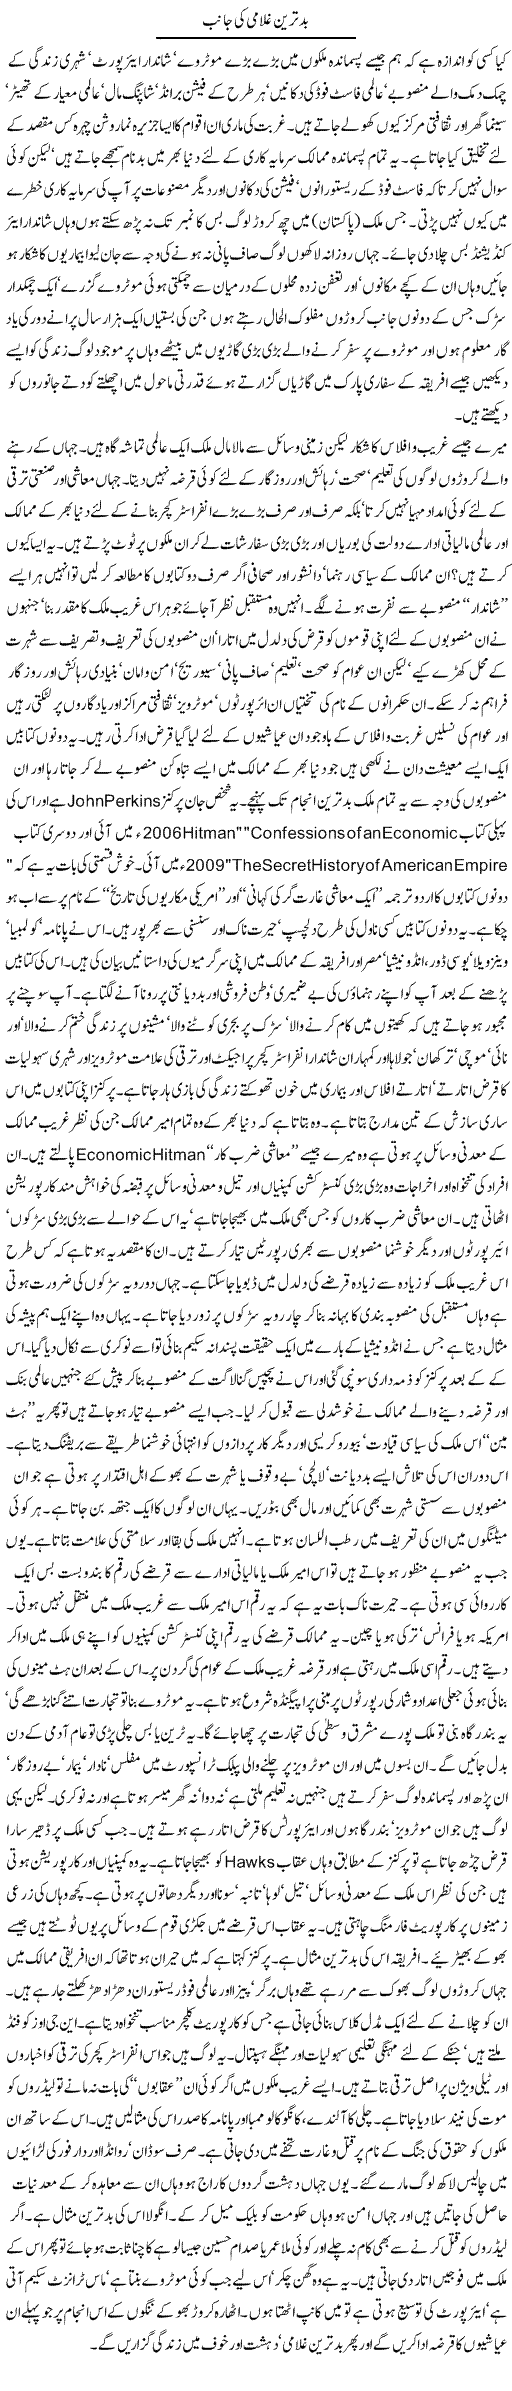 Badtareen Ghulami Ki Janib | Orya Maqbool Jan | Daily Urdu Columns